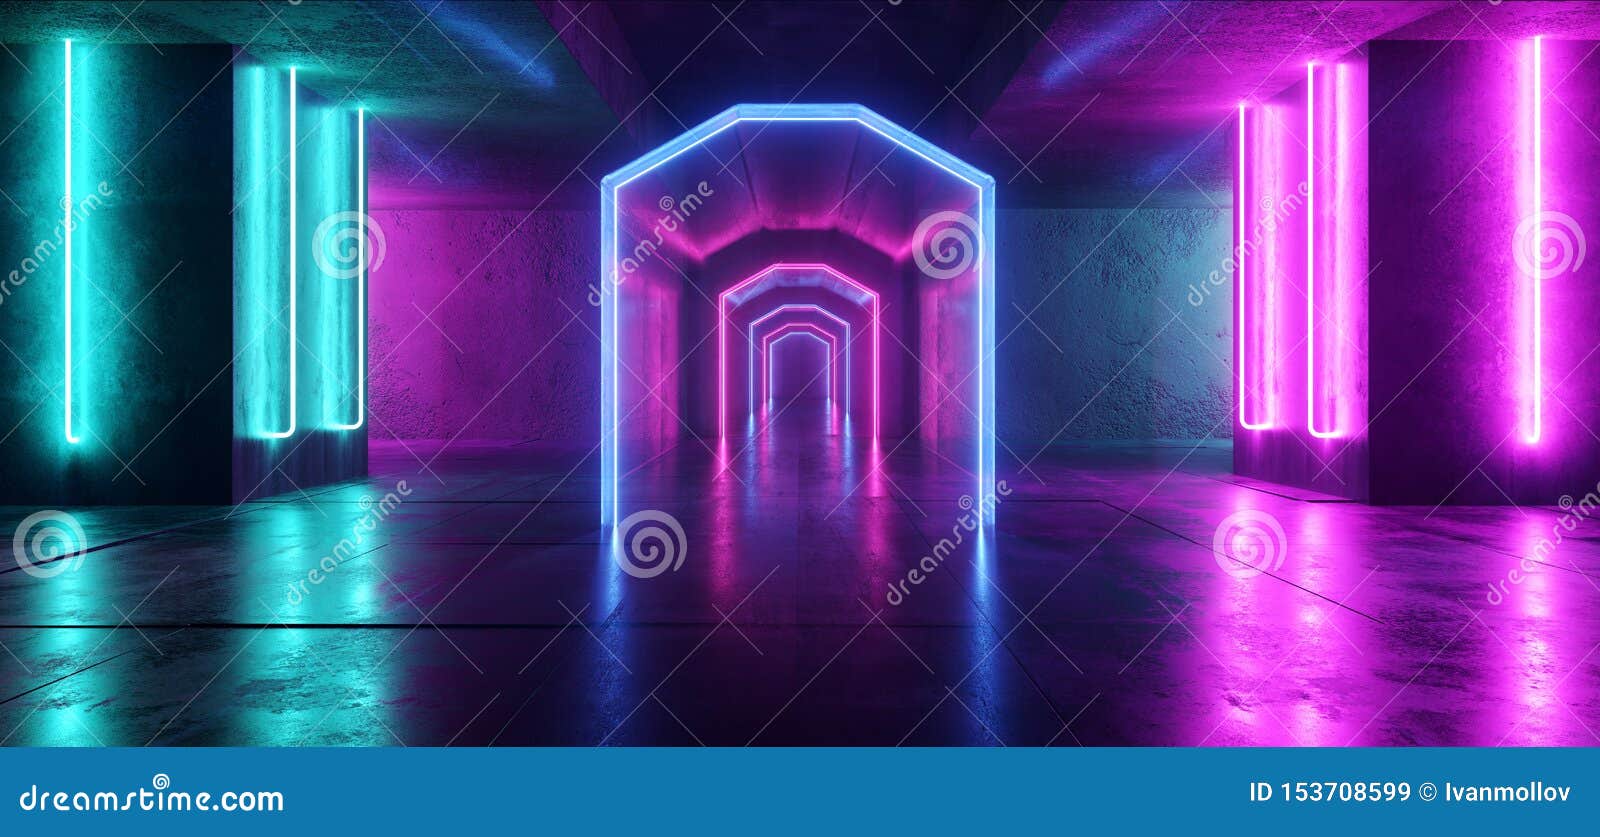 Futuristic Sci Fi Laser Neon Shapes Glowing Light Vibrant Purple Blue ...